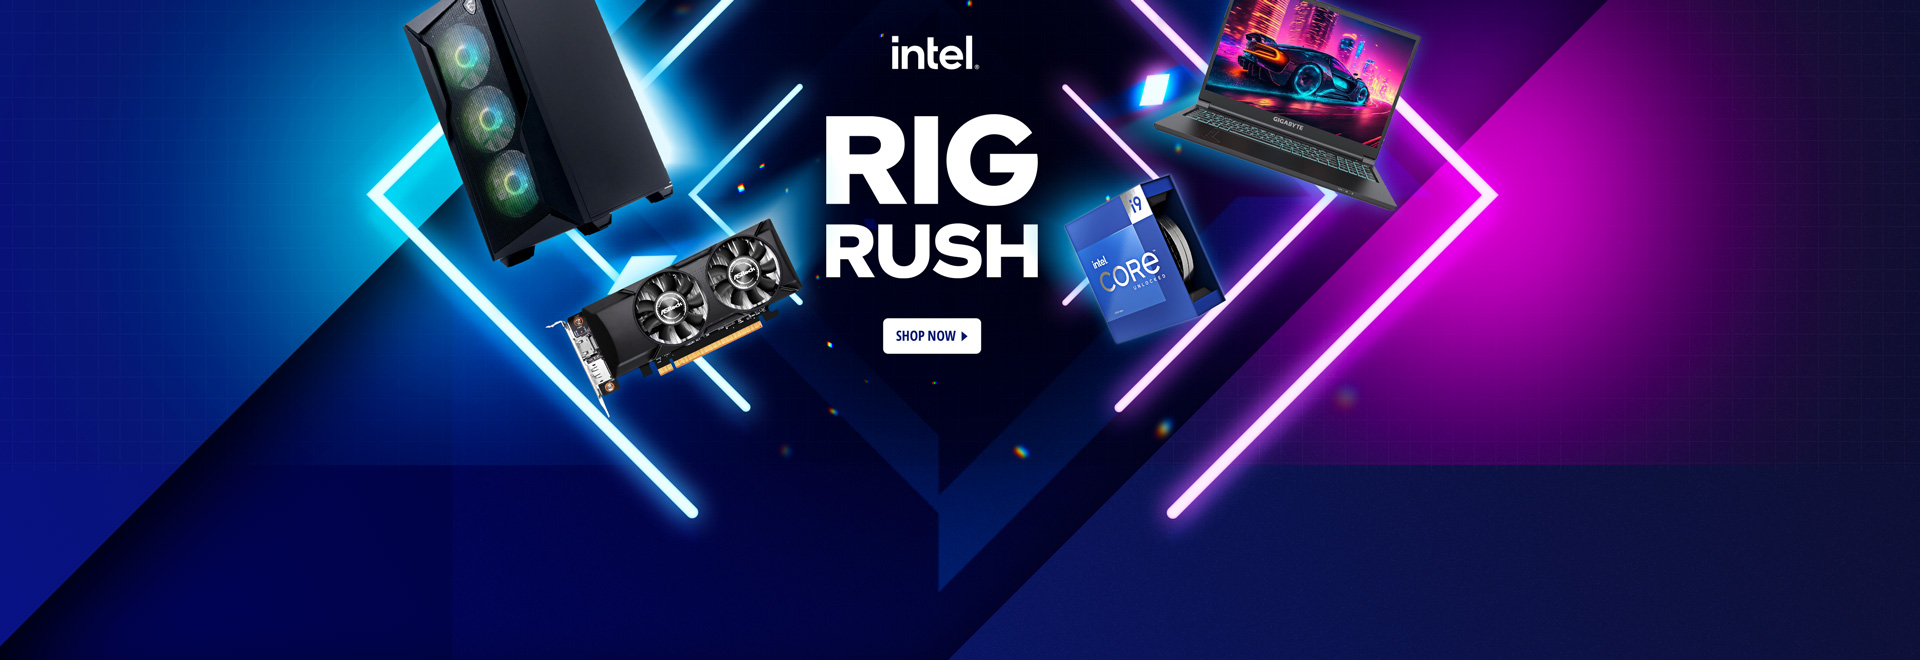 Intel Rig Rush